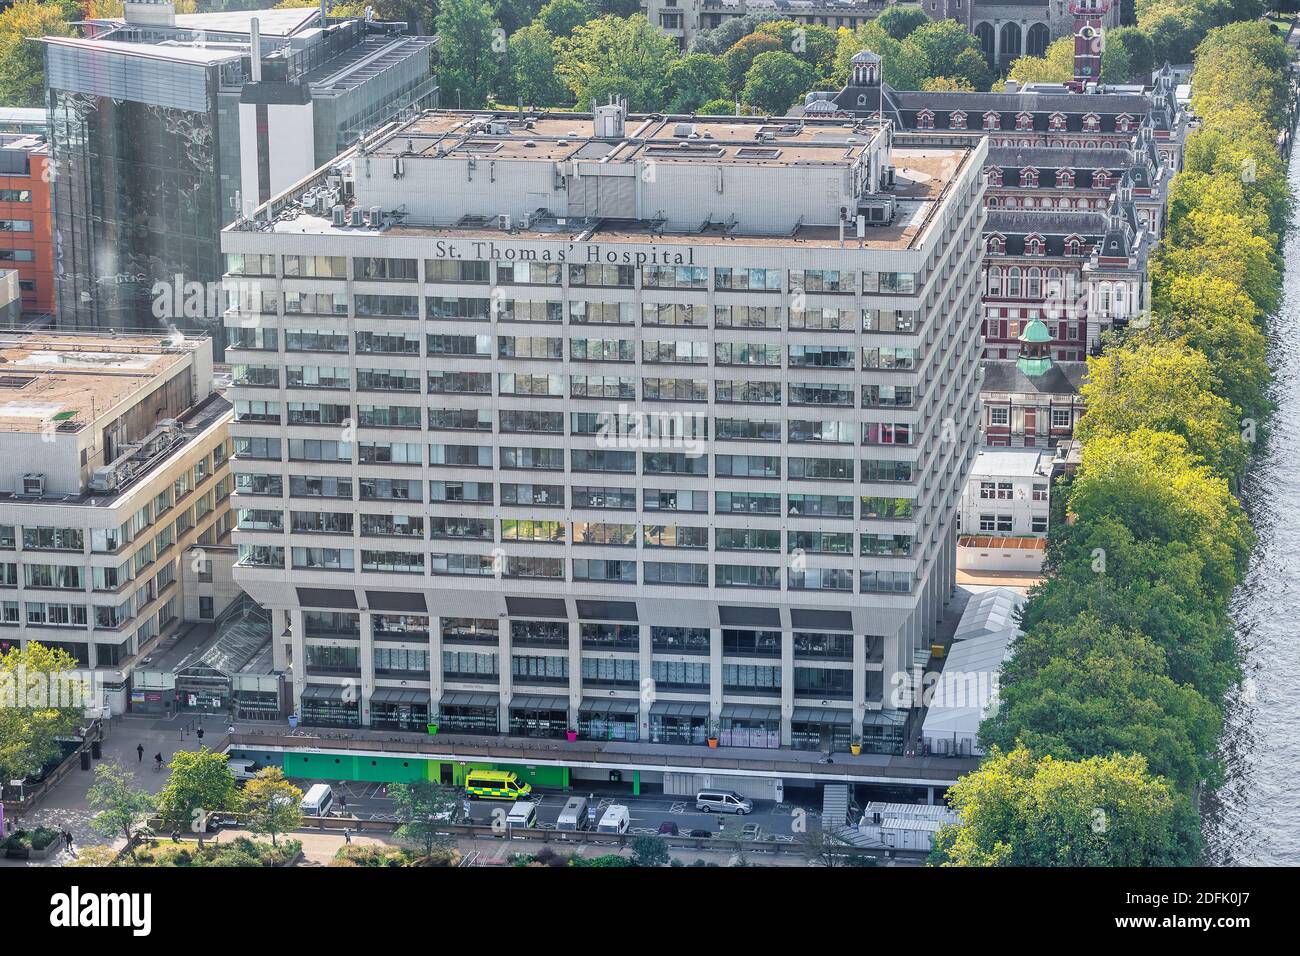 LONDON, UNITED KINGDOM - SEPTEMBER 28th 2020: Aerial view of St Thomas's hospital Stock Photo